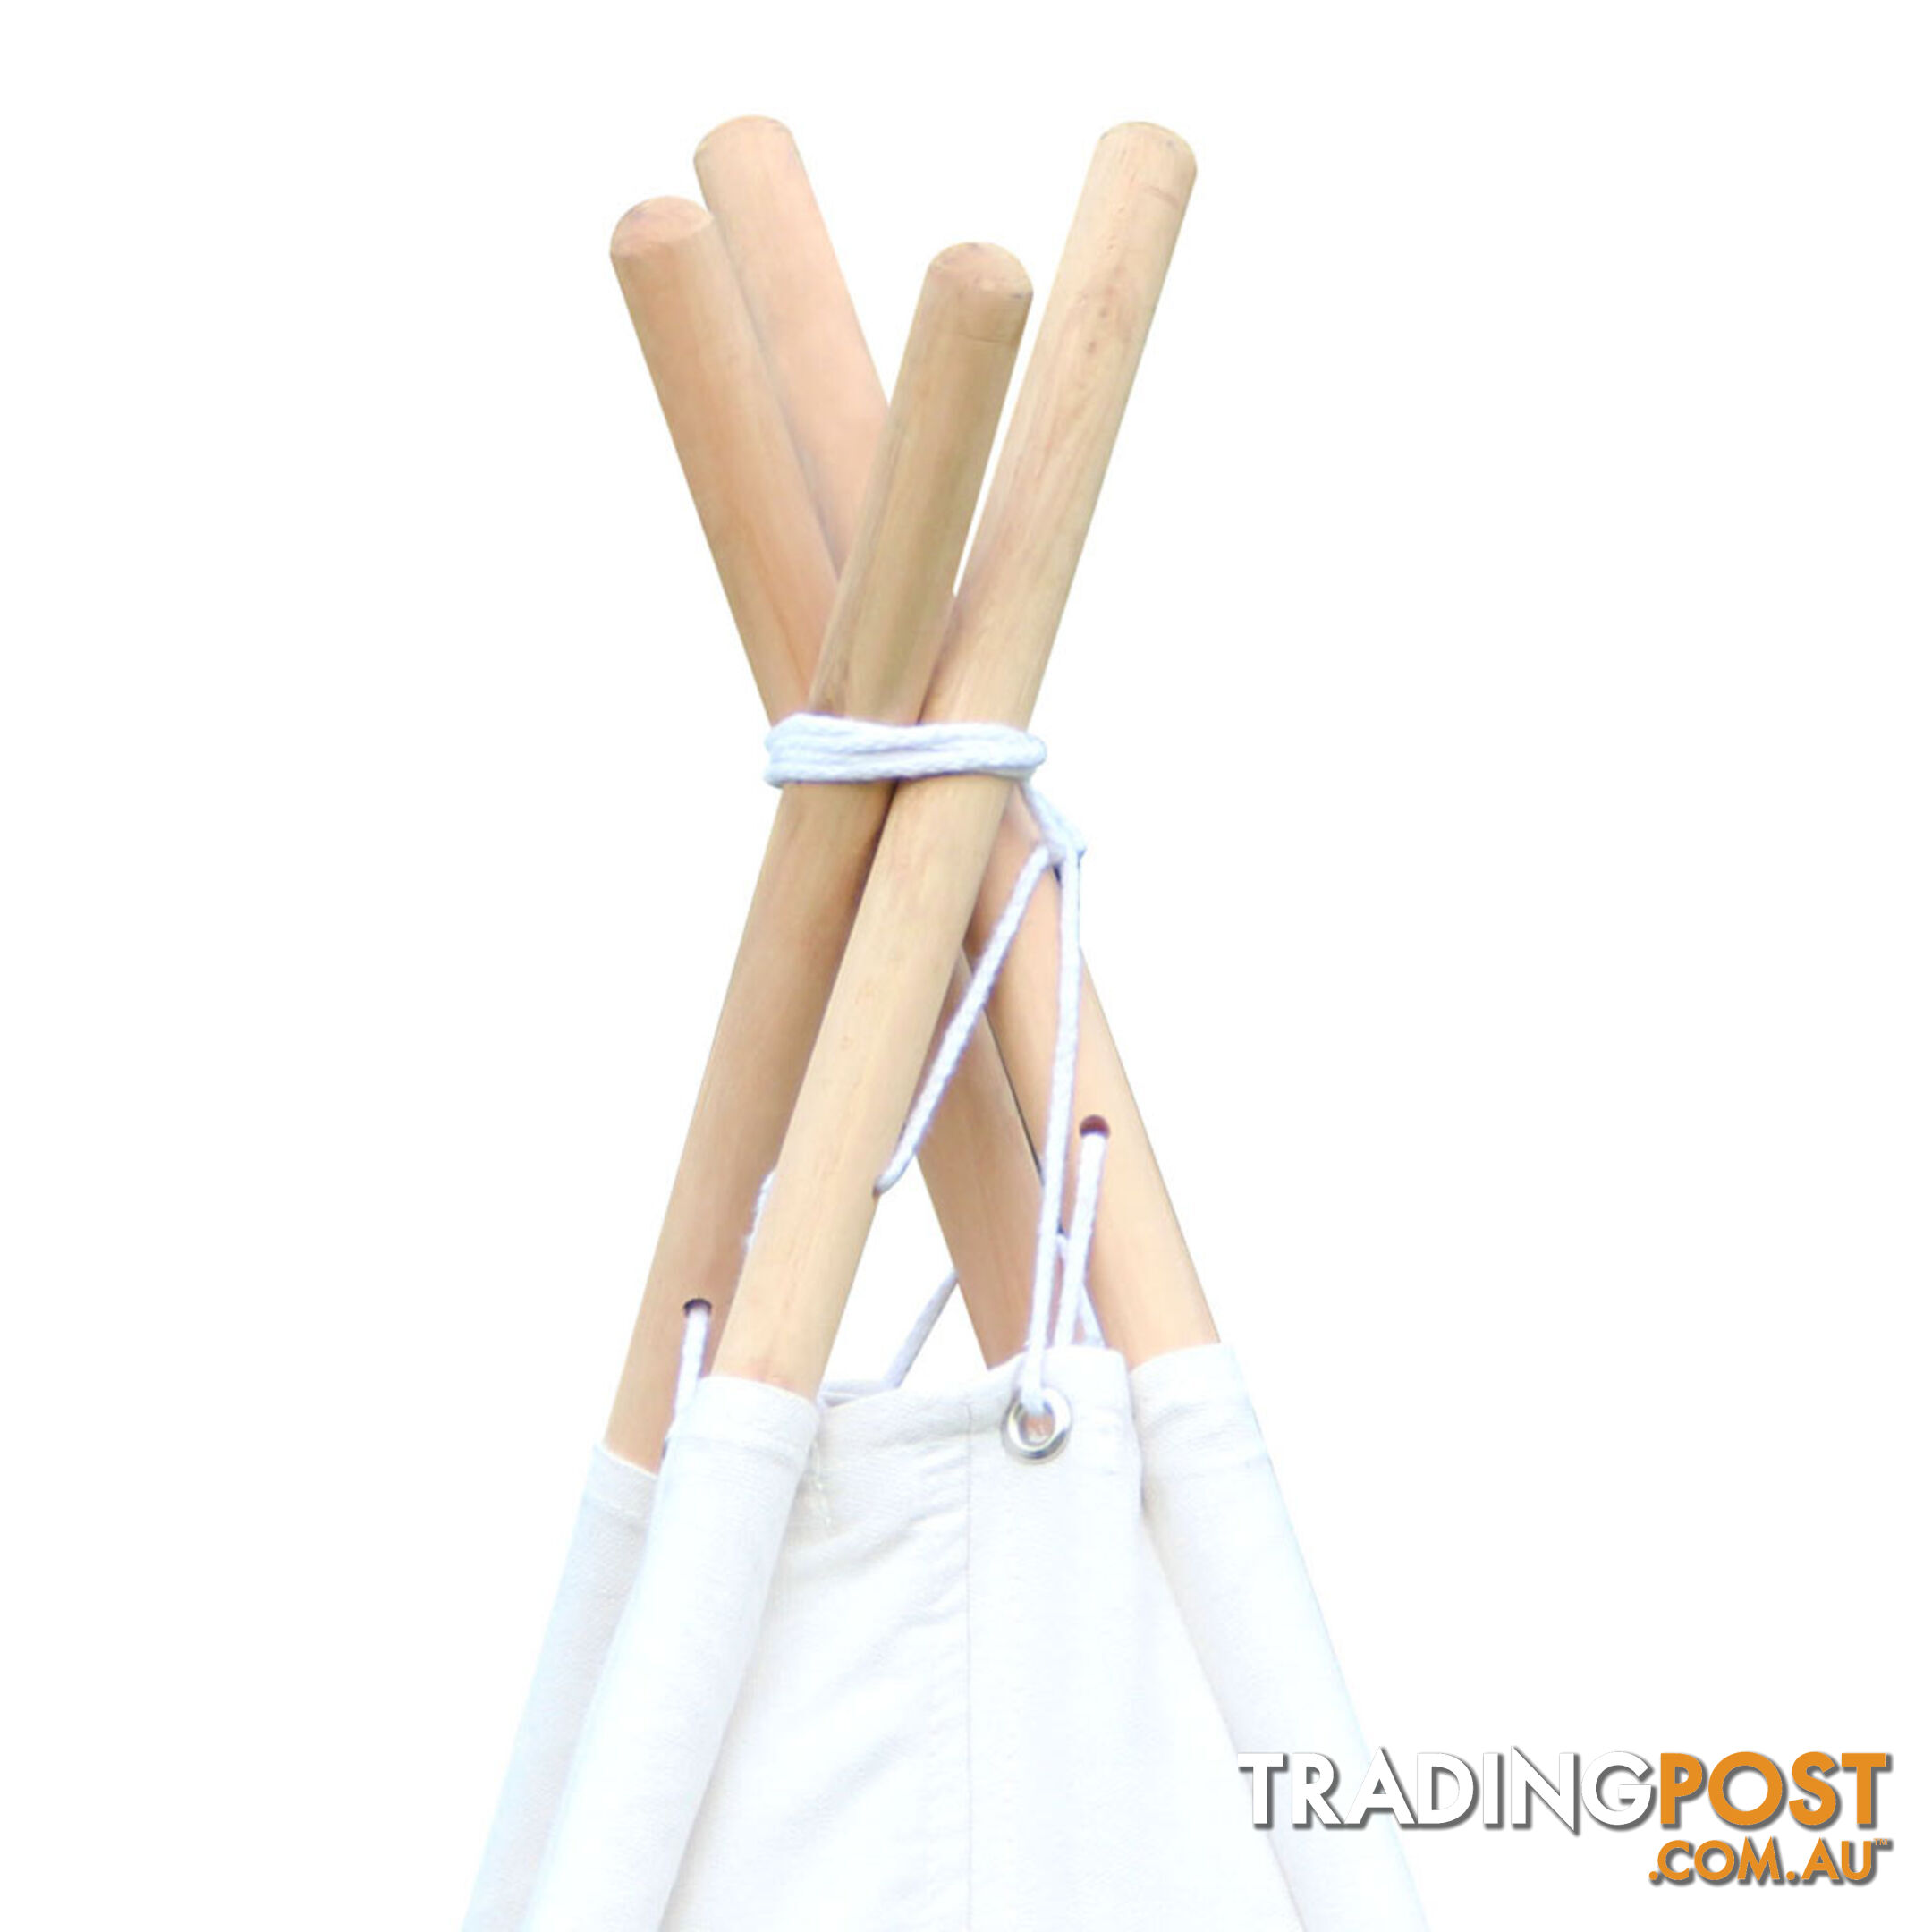 4 Poles Teepee Tent w/ Storage Bag